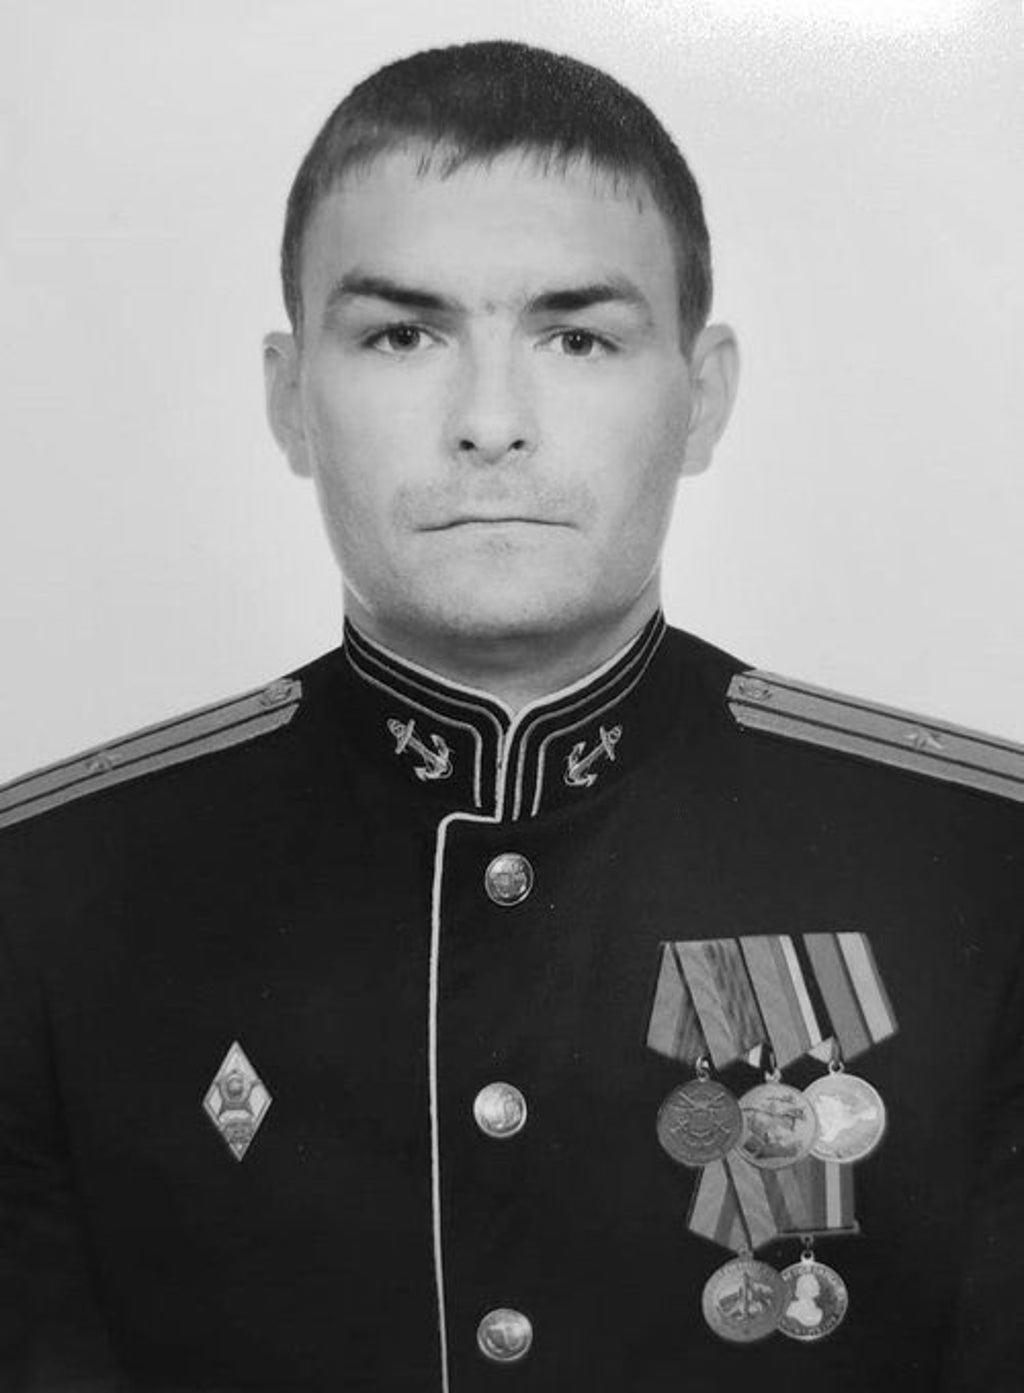 Russian captain of Black Sea landing ship killed in Ukraine invasion in latest blow for Putin